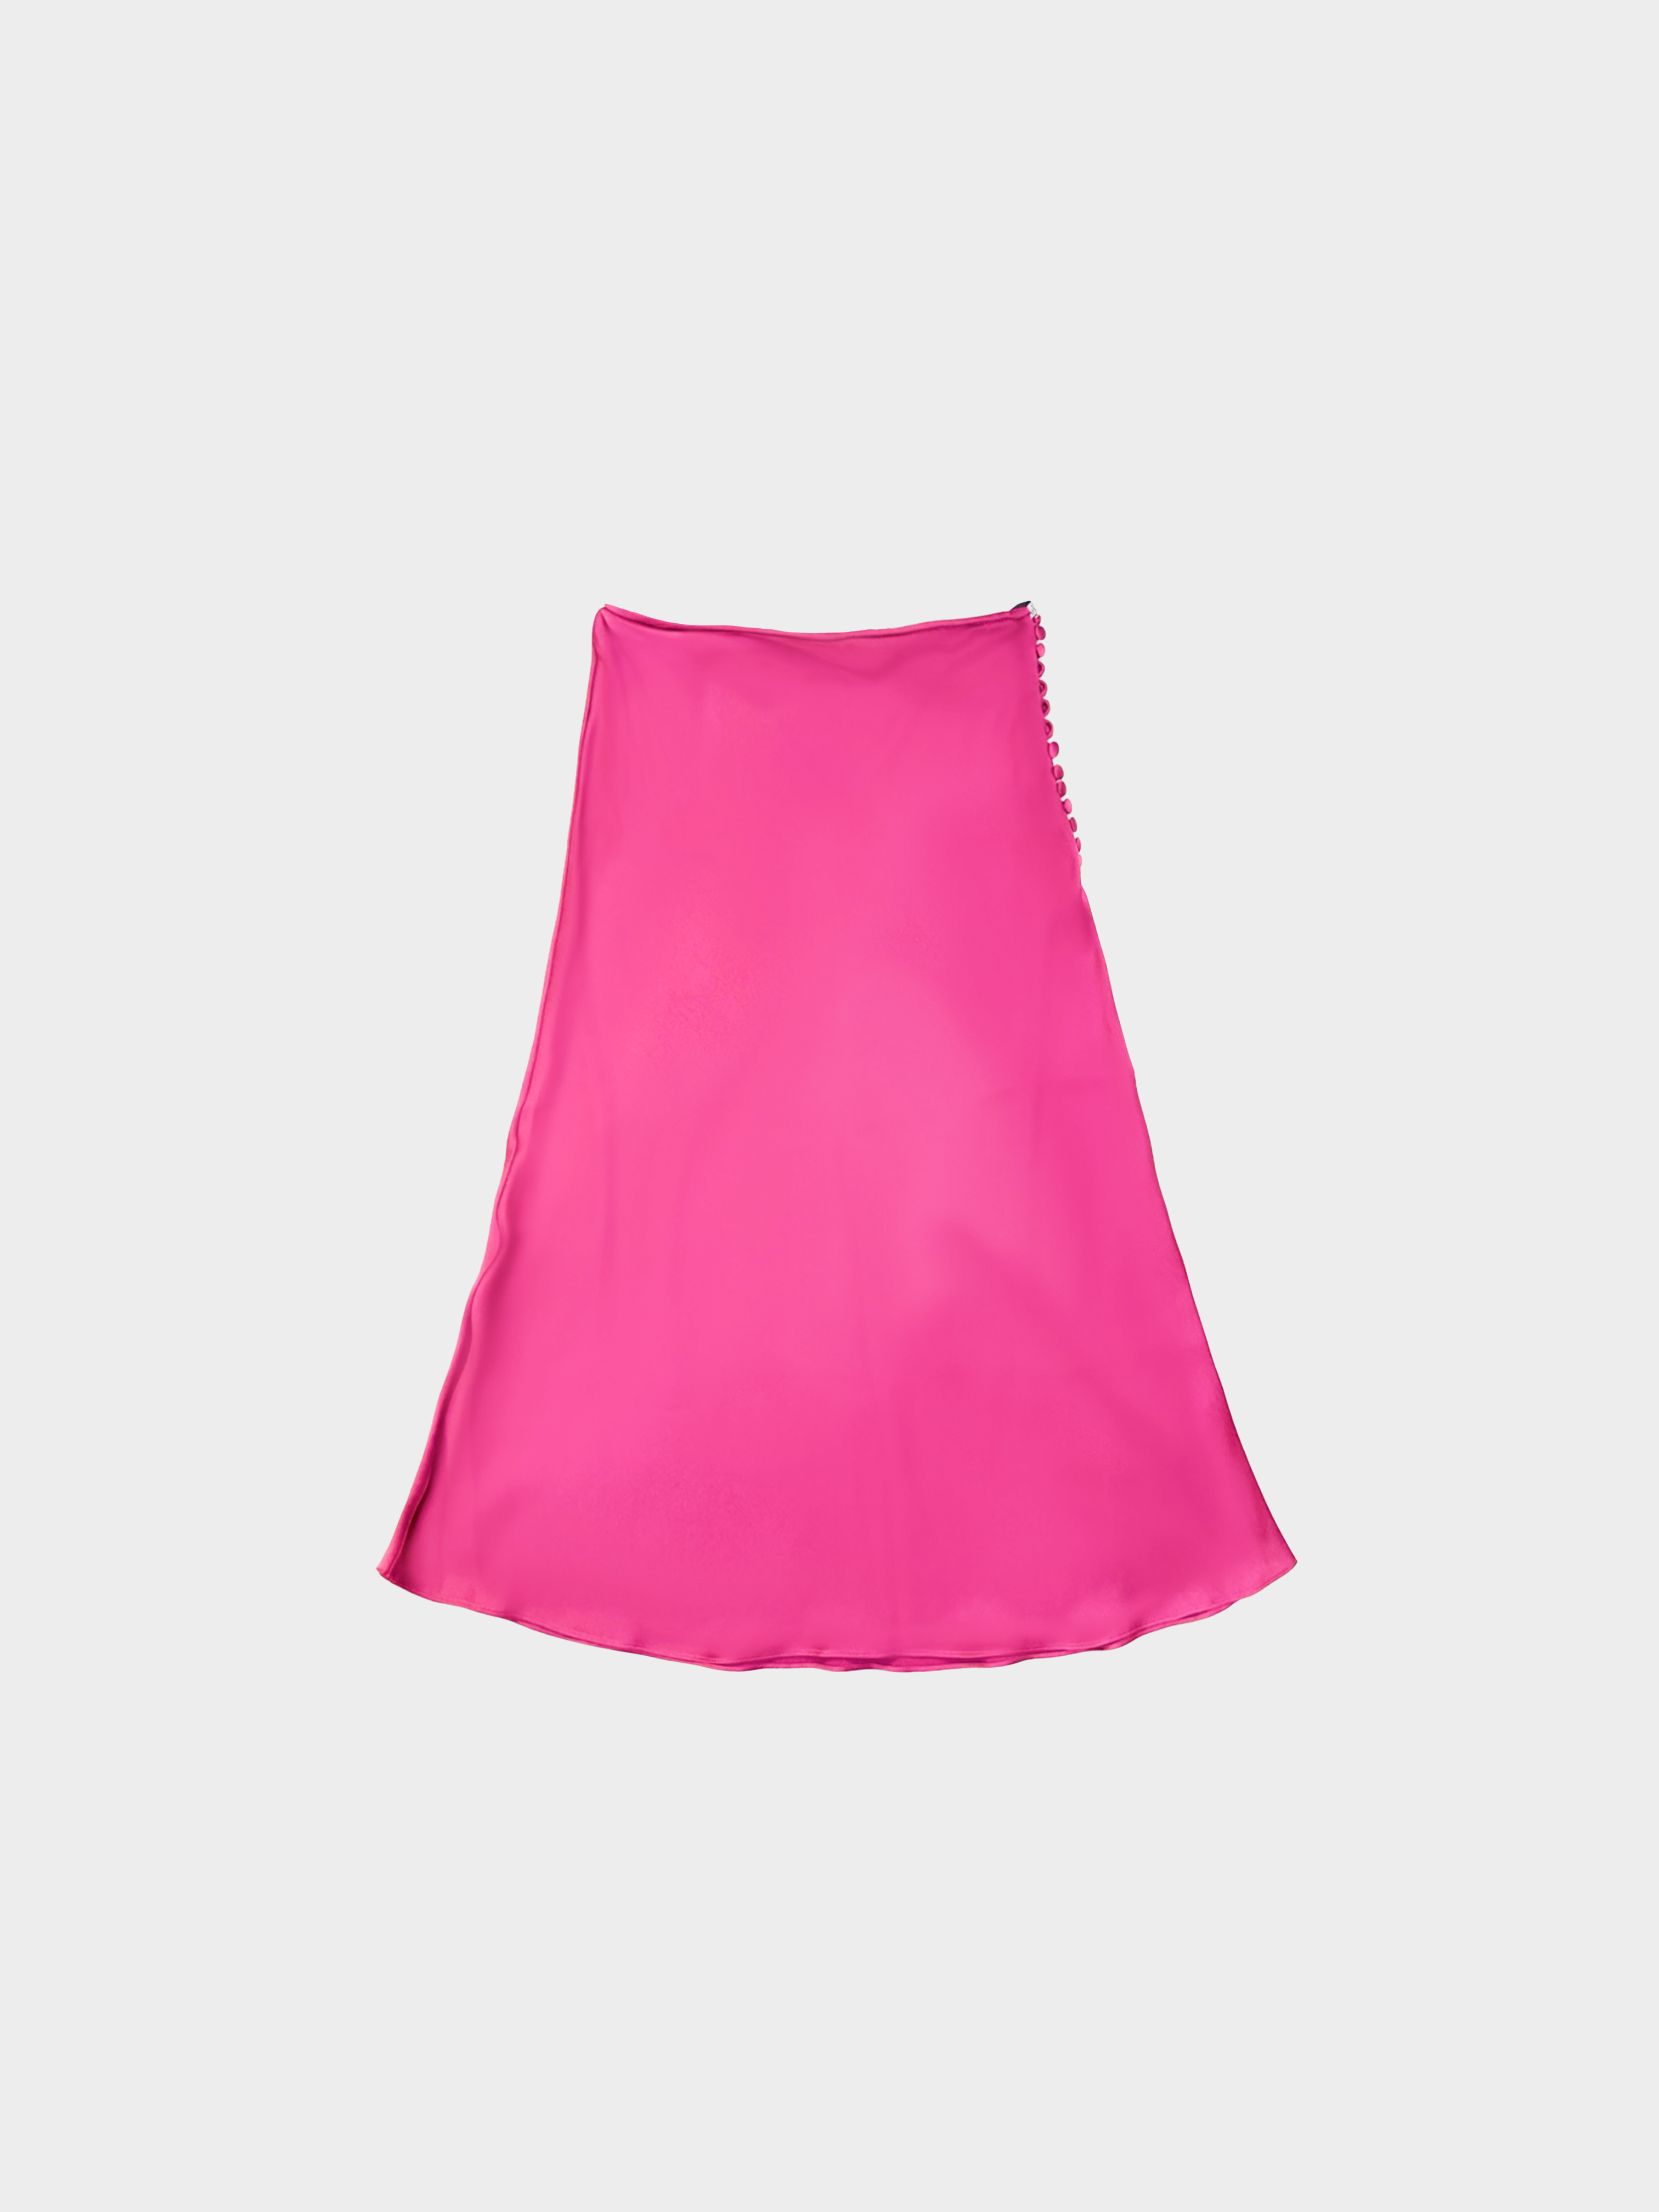 Christian Dior 2000s Pink Satin Button Down Skirt